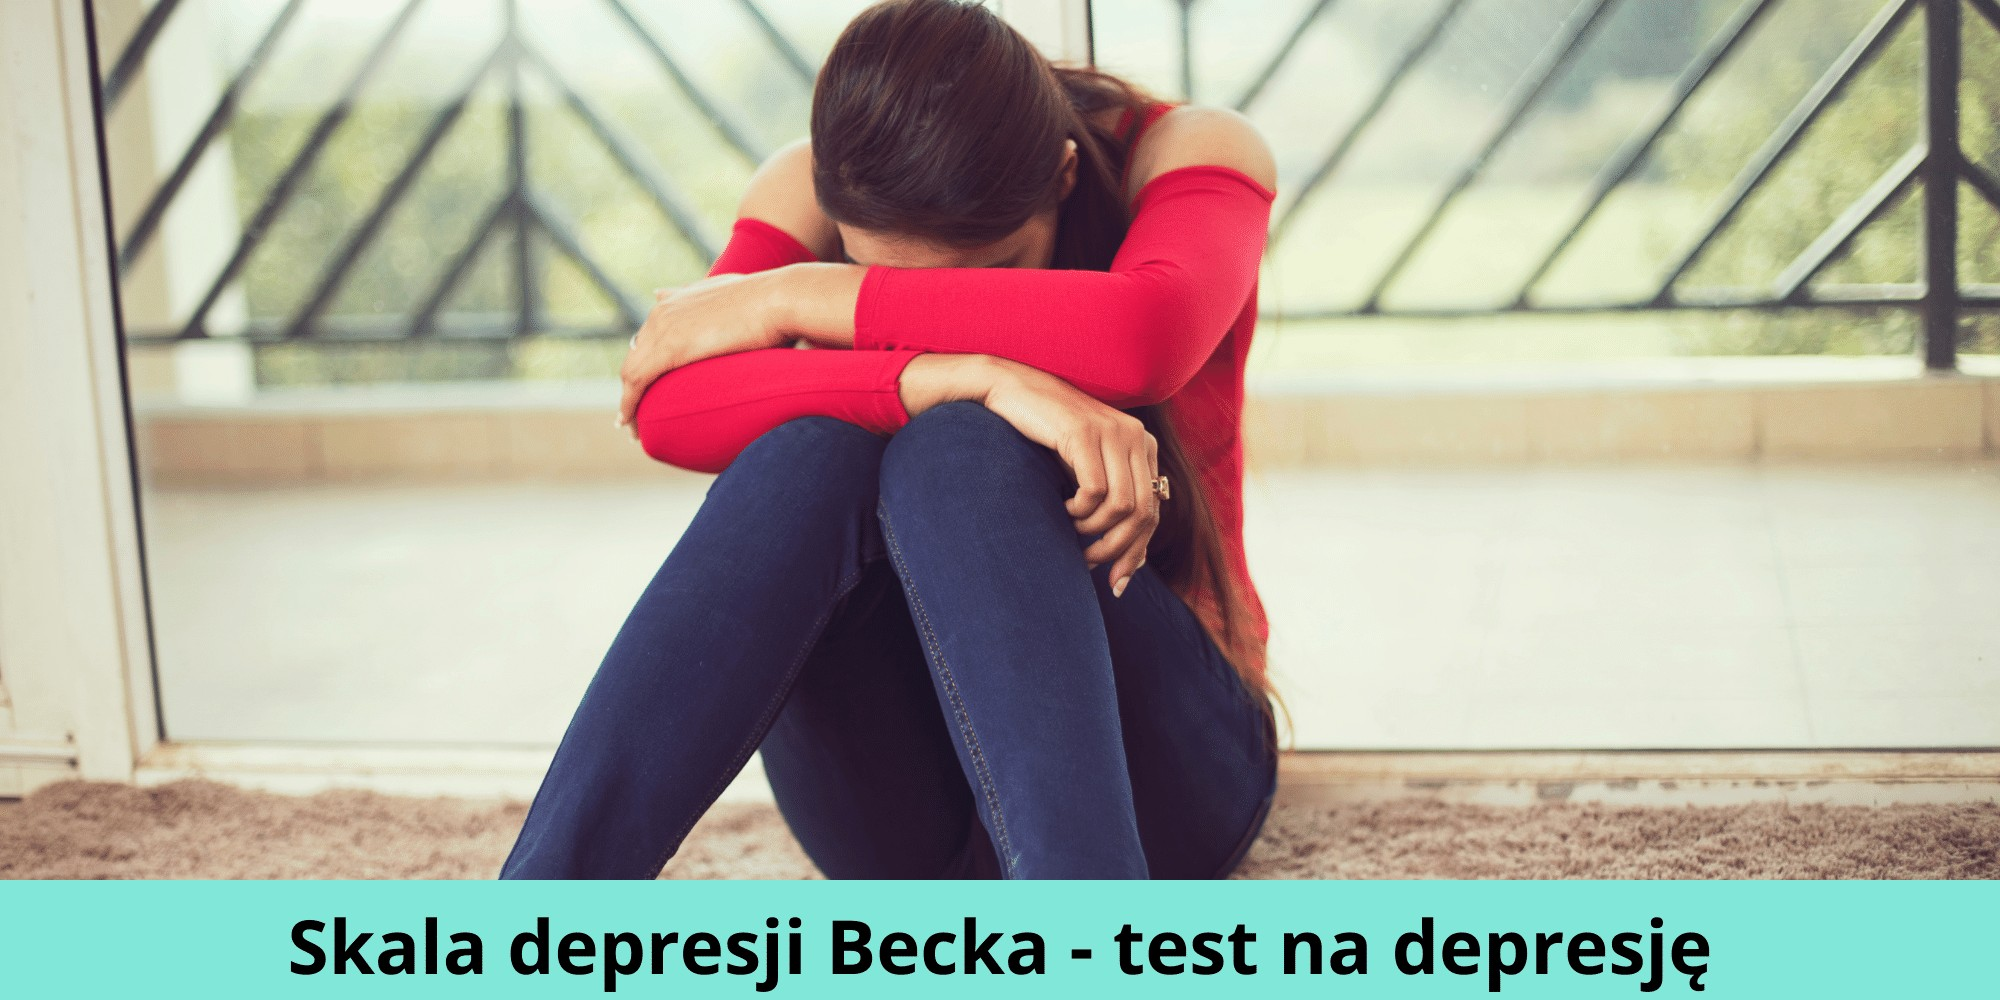 ​Skala depresji Becka - test na depresję